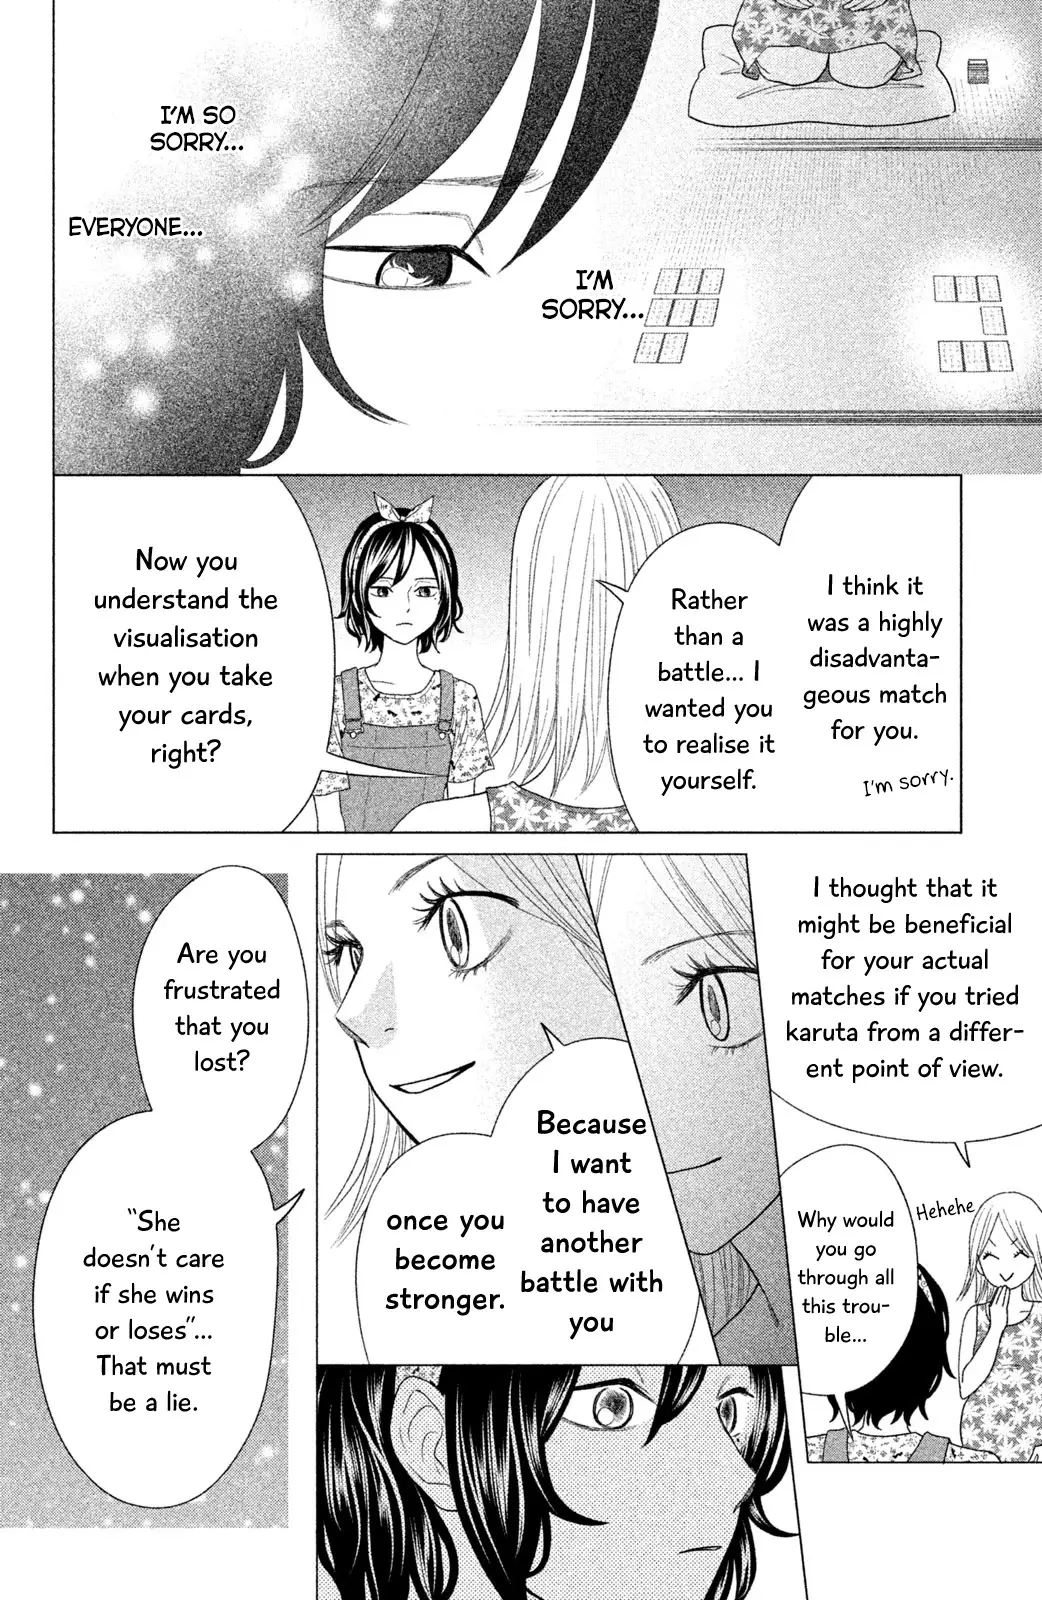 Chihayafuru: Middle School Arc - 12 page 15